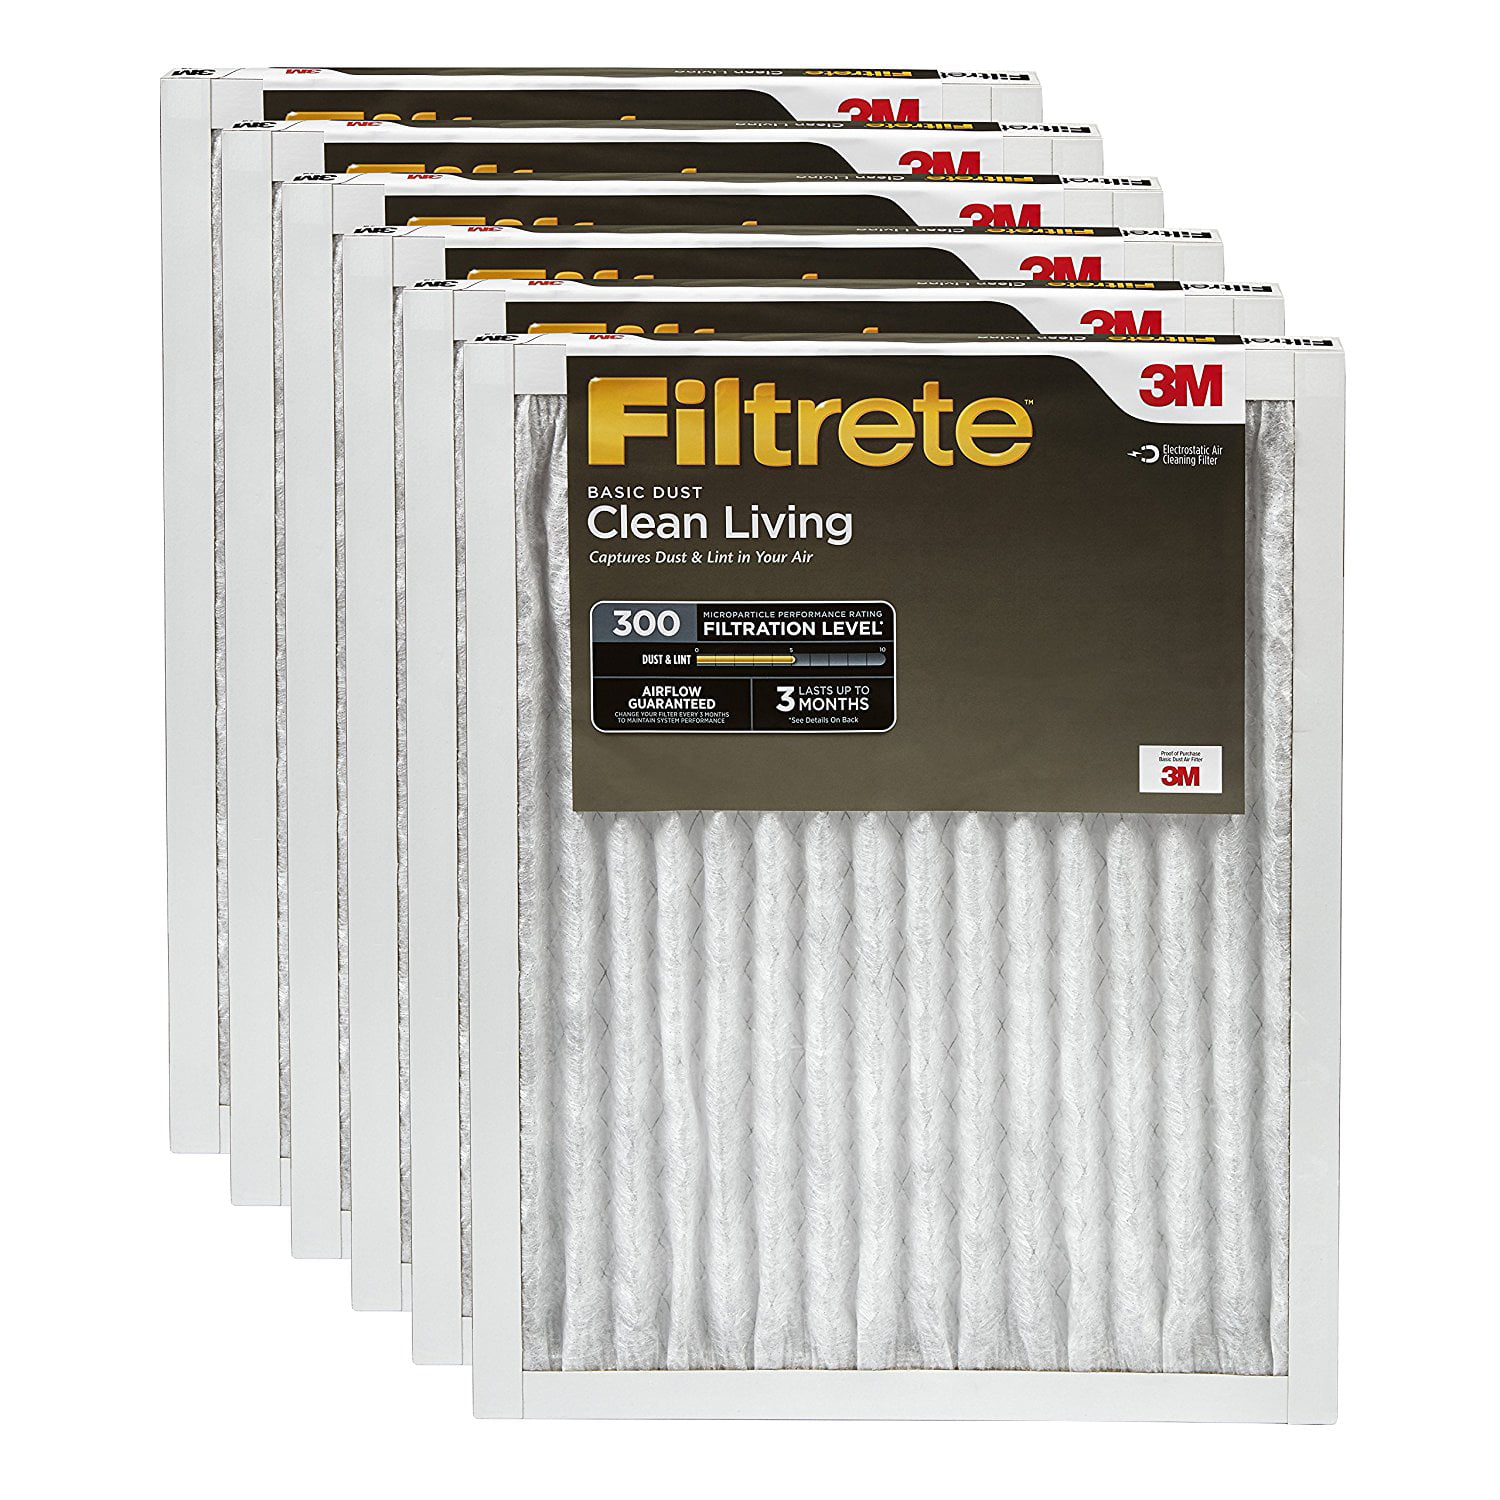 Filtrete A/C Filters MPR 300 Clean Living Basic Dust AC Furnace Air Filter 6-Pk